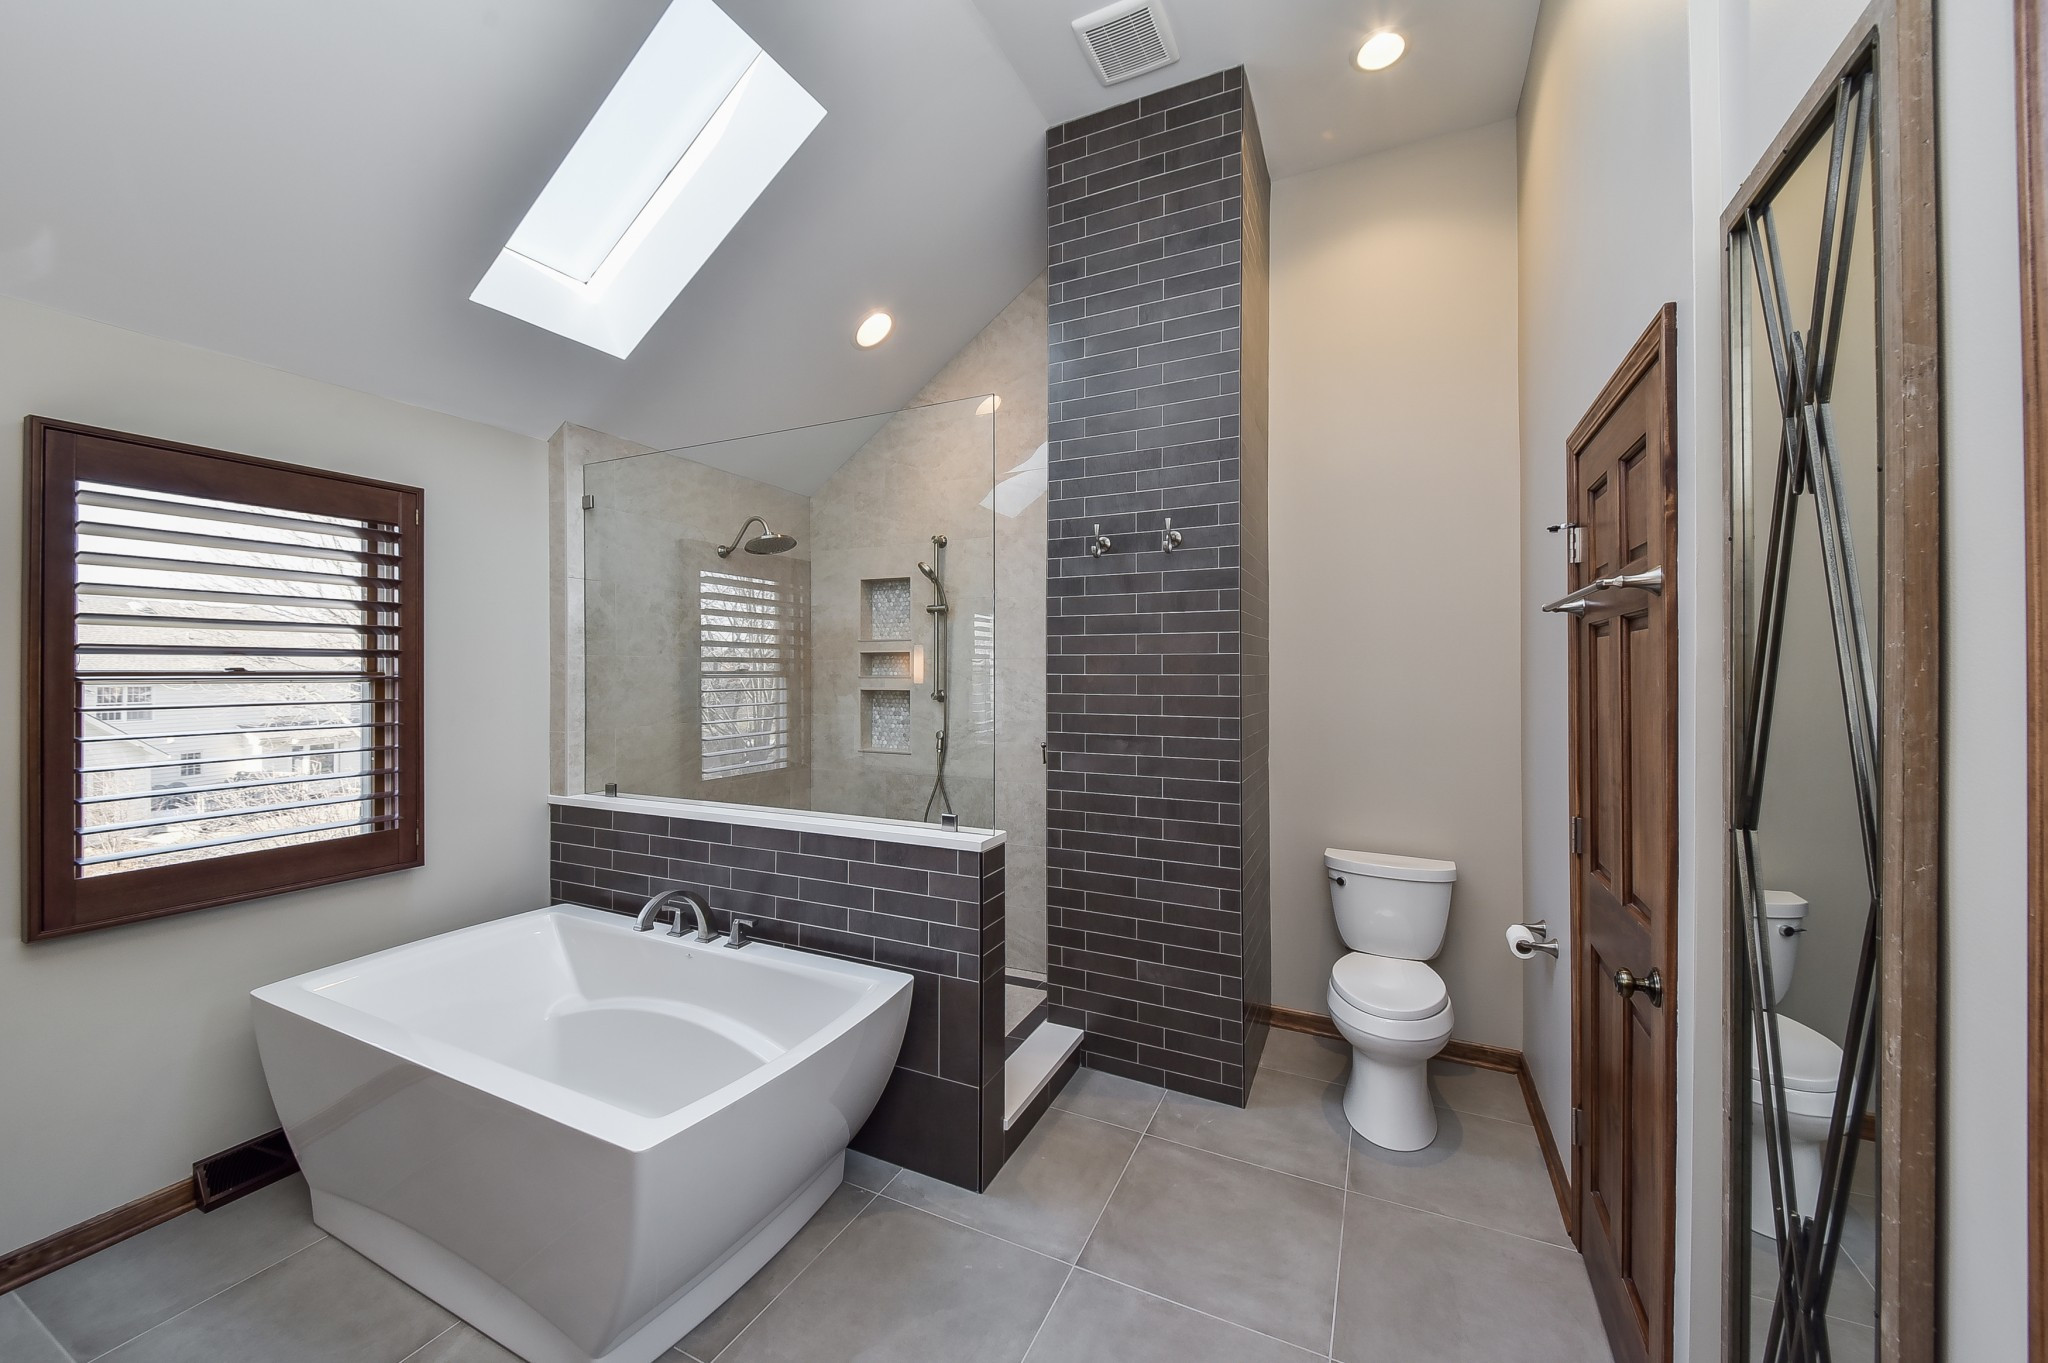 Bathroom Decor Ideas 2020
 14 Bathroom Design Trends For 2020